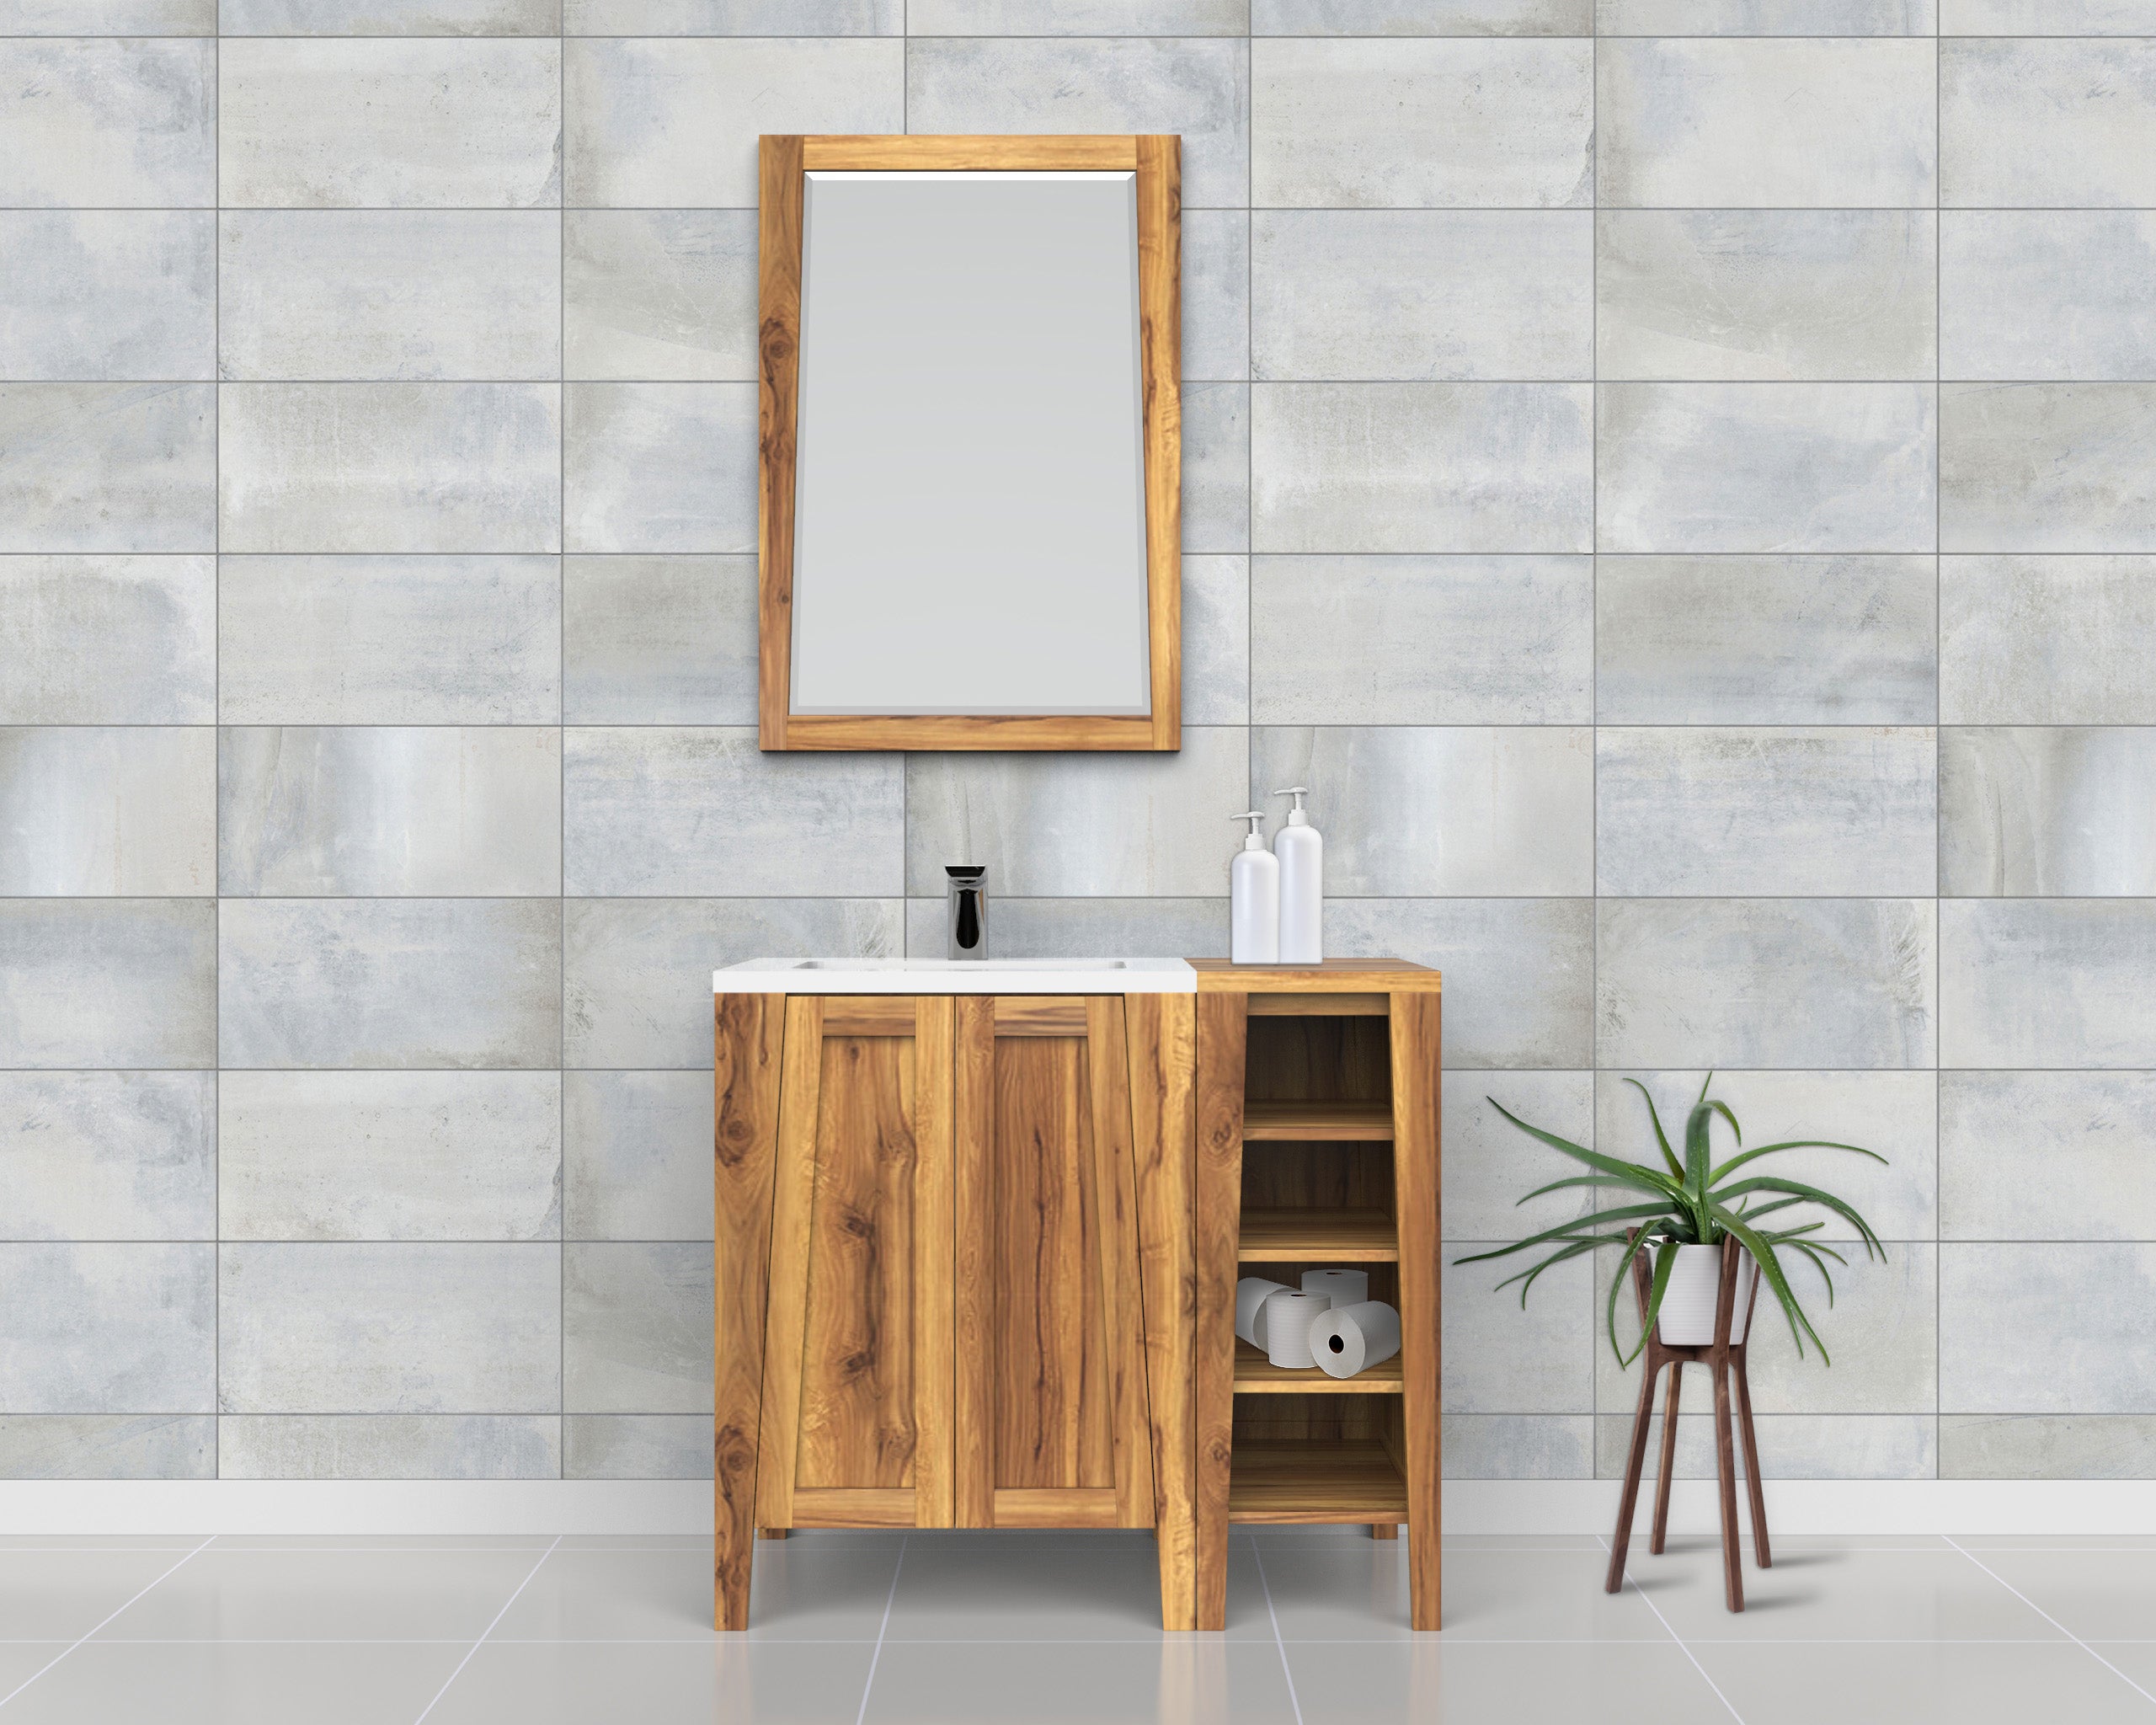 Significado® 24" Teak Wood Bathroom Vanity - Signifiacado® 12”L Modular Compact Side Vanity - Significado® 24" x 35" Teak Wood Wall Mirror